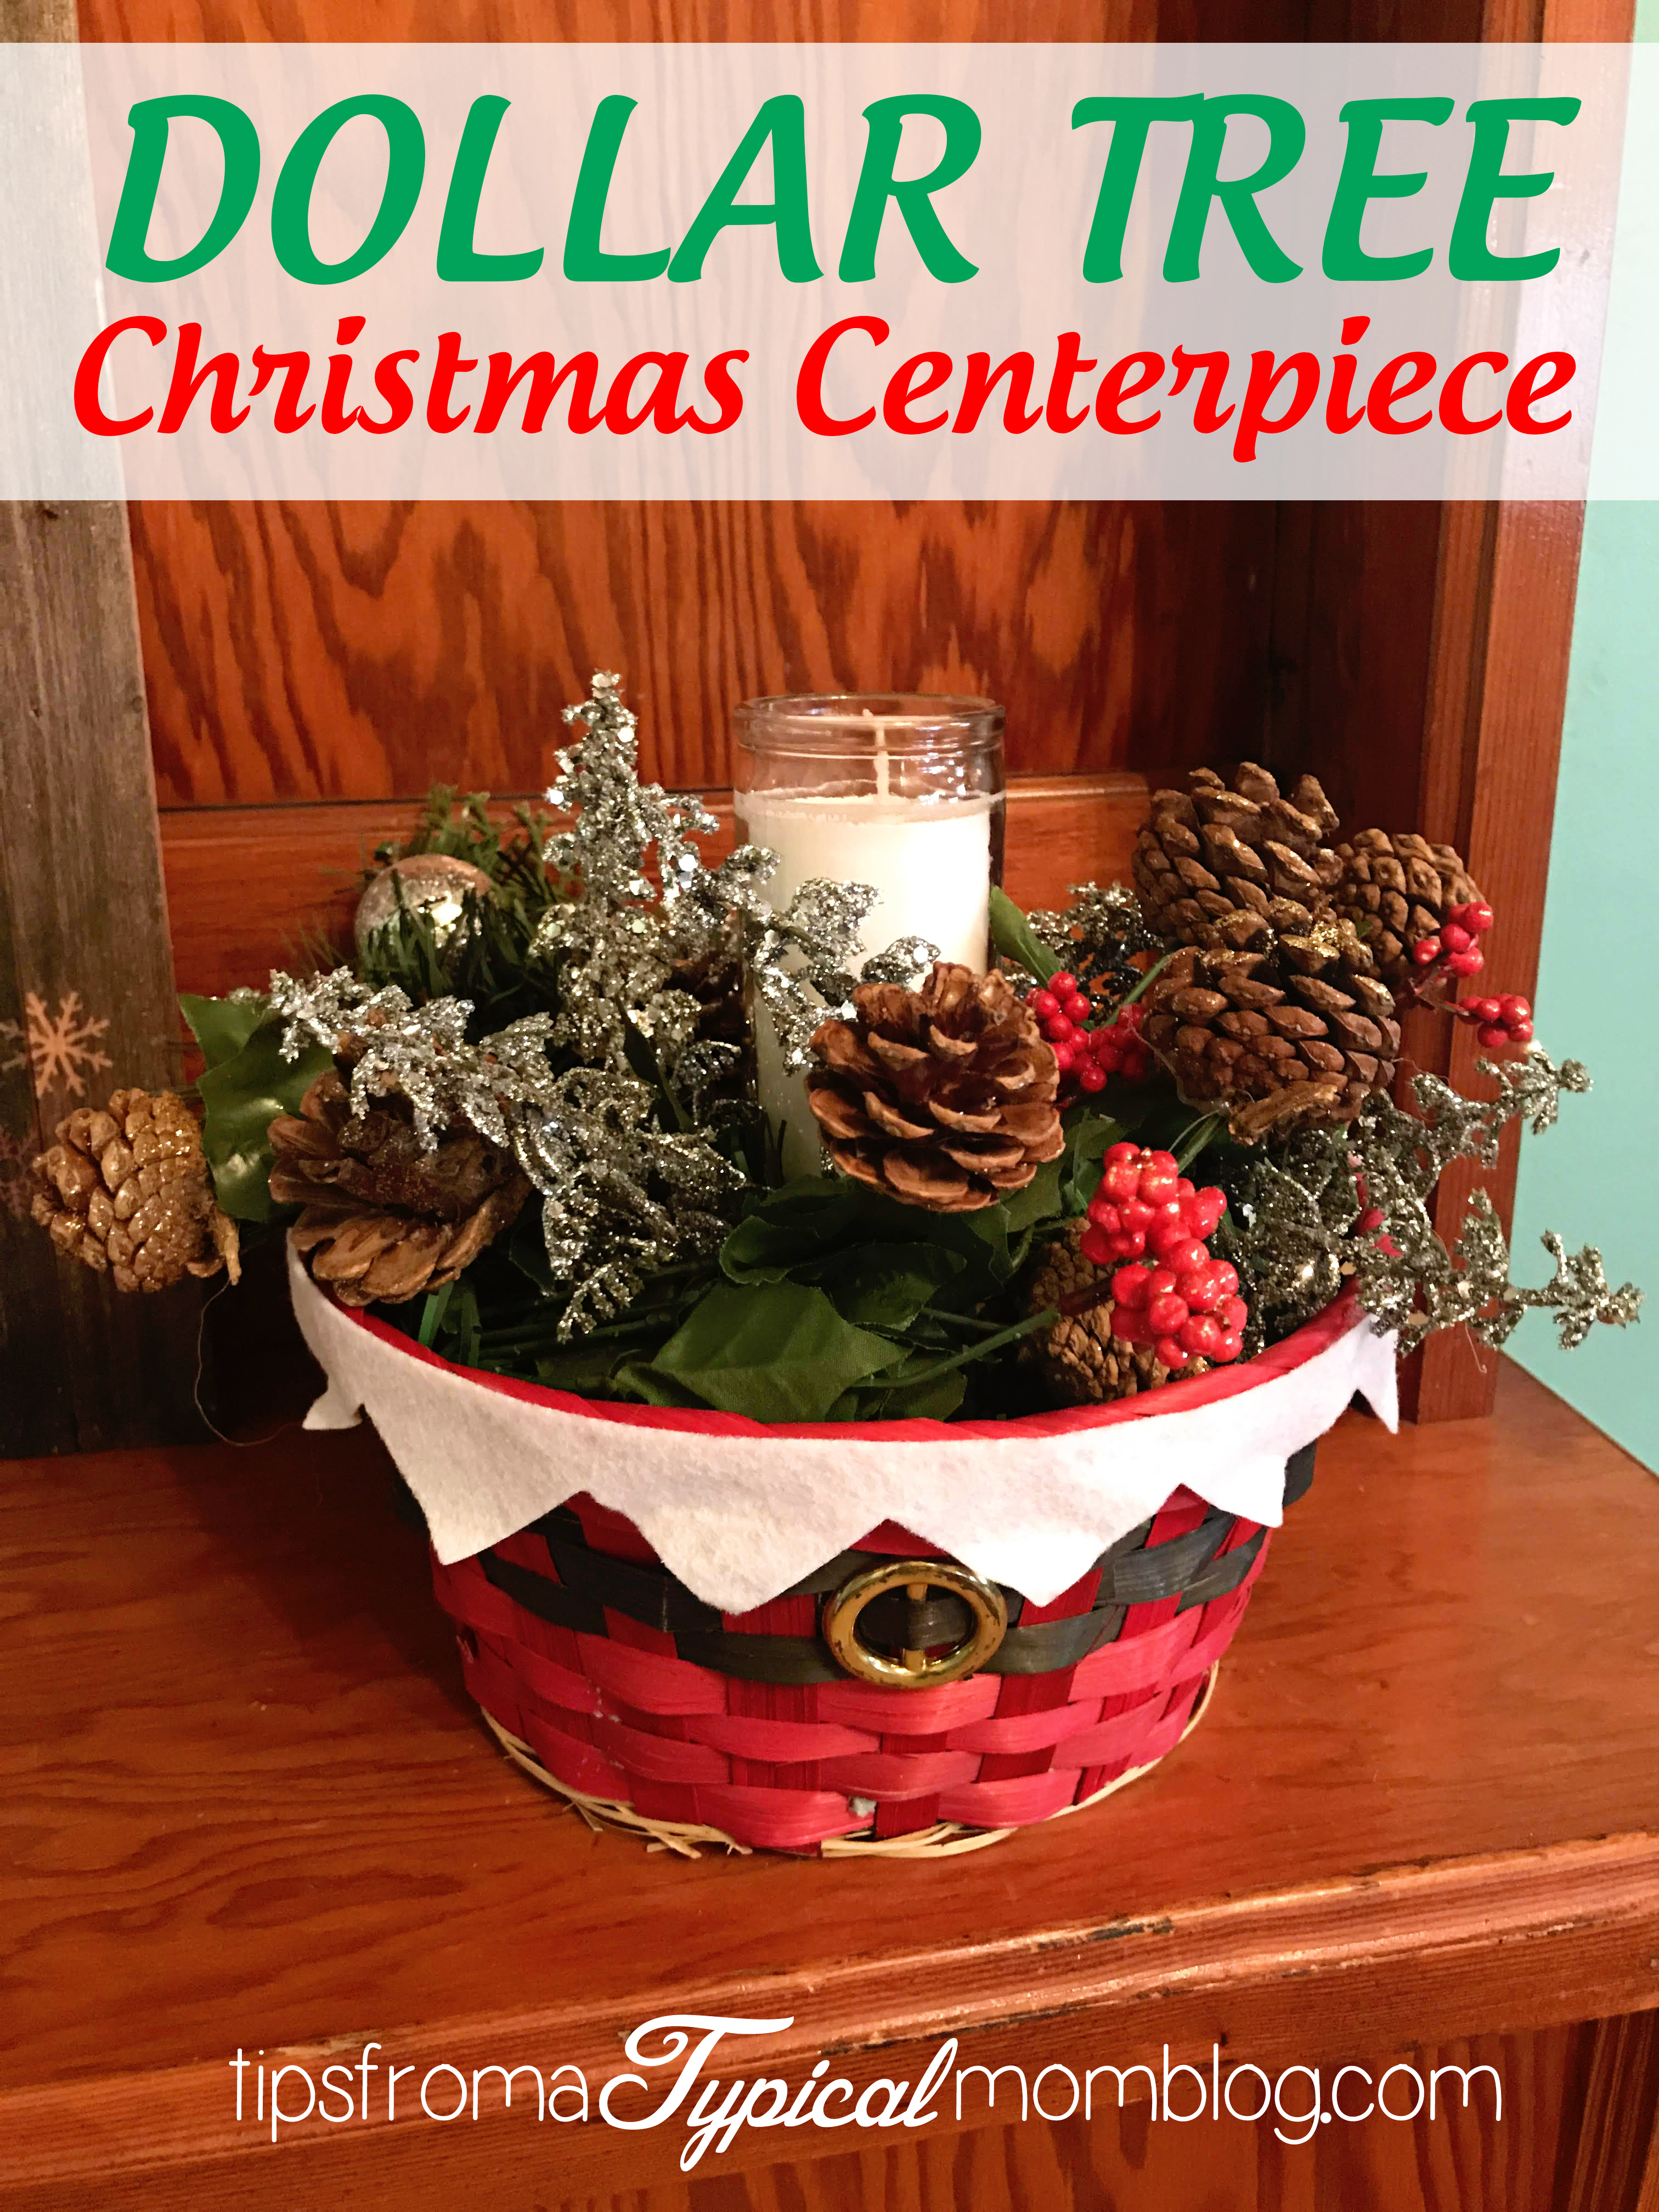 https://www.tipsfromatypicalmomblog.com/wp-content/uploads/2018/11/Dollar-Tree-Christmas-Centerpiece.jpg